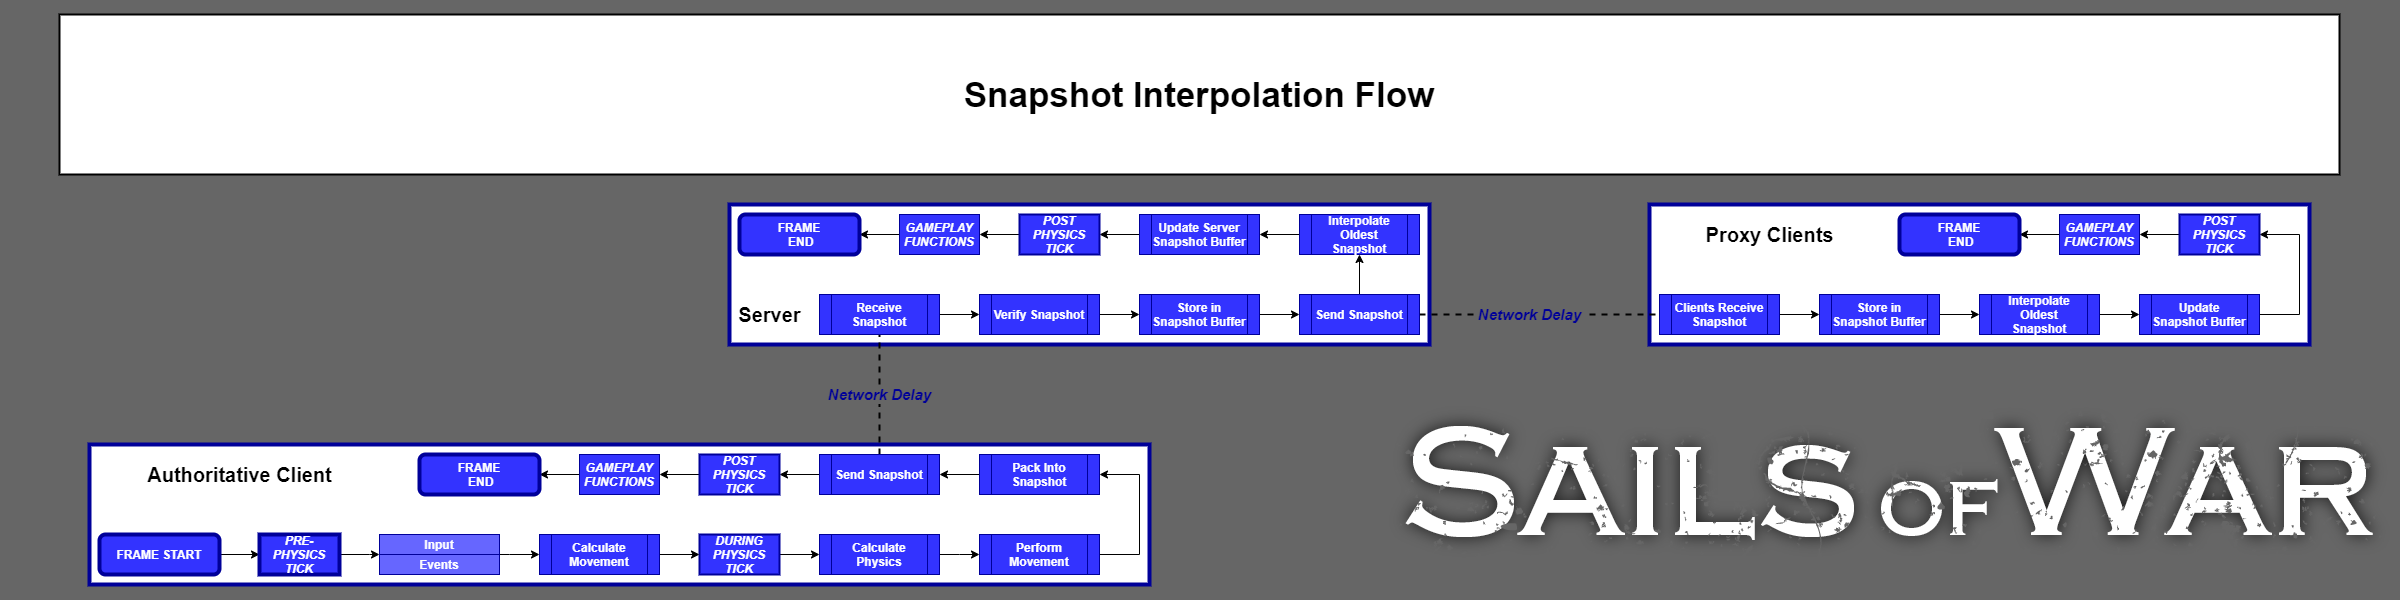 Snapshot Interpolation Diagram